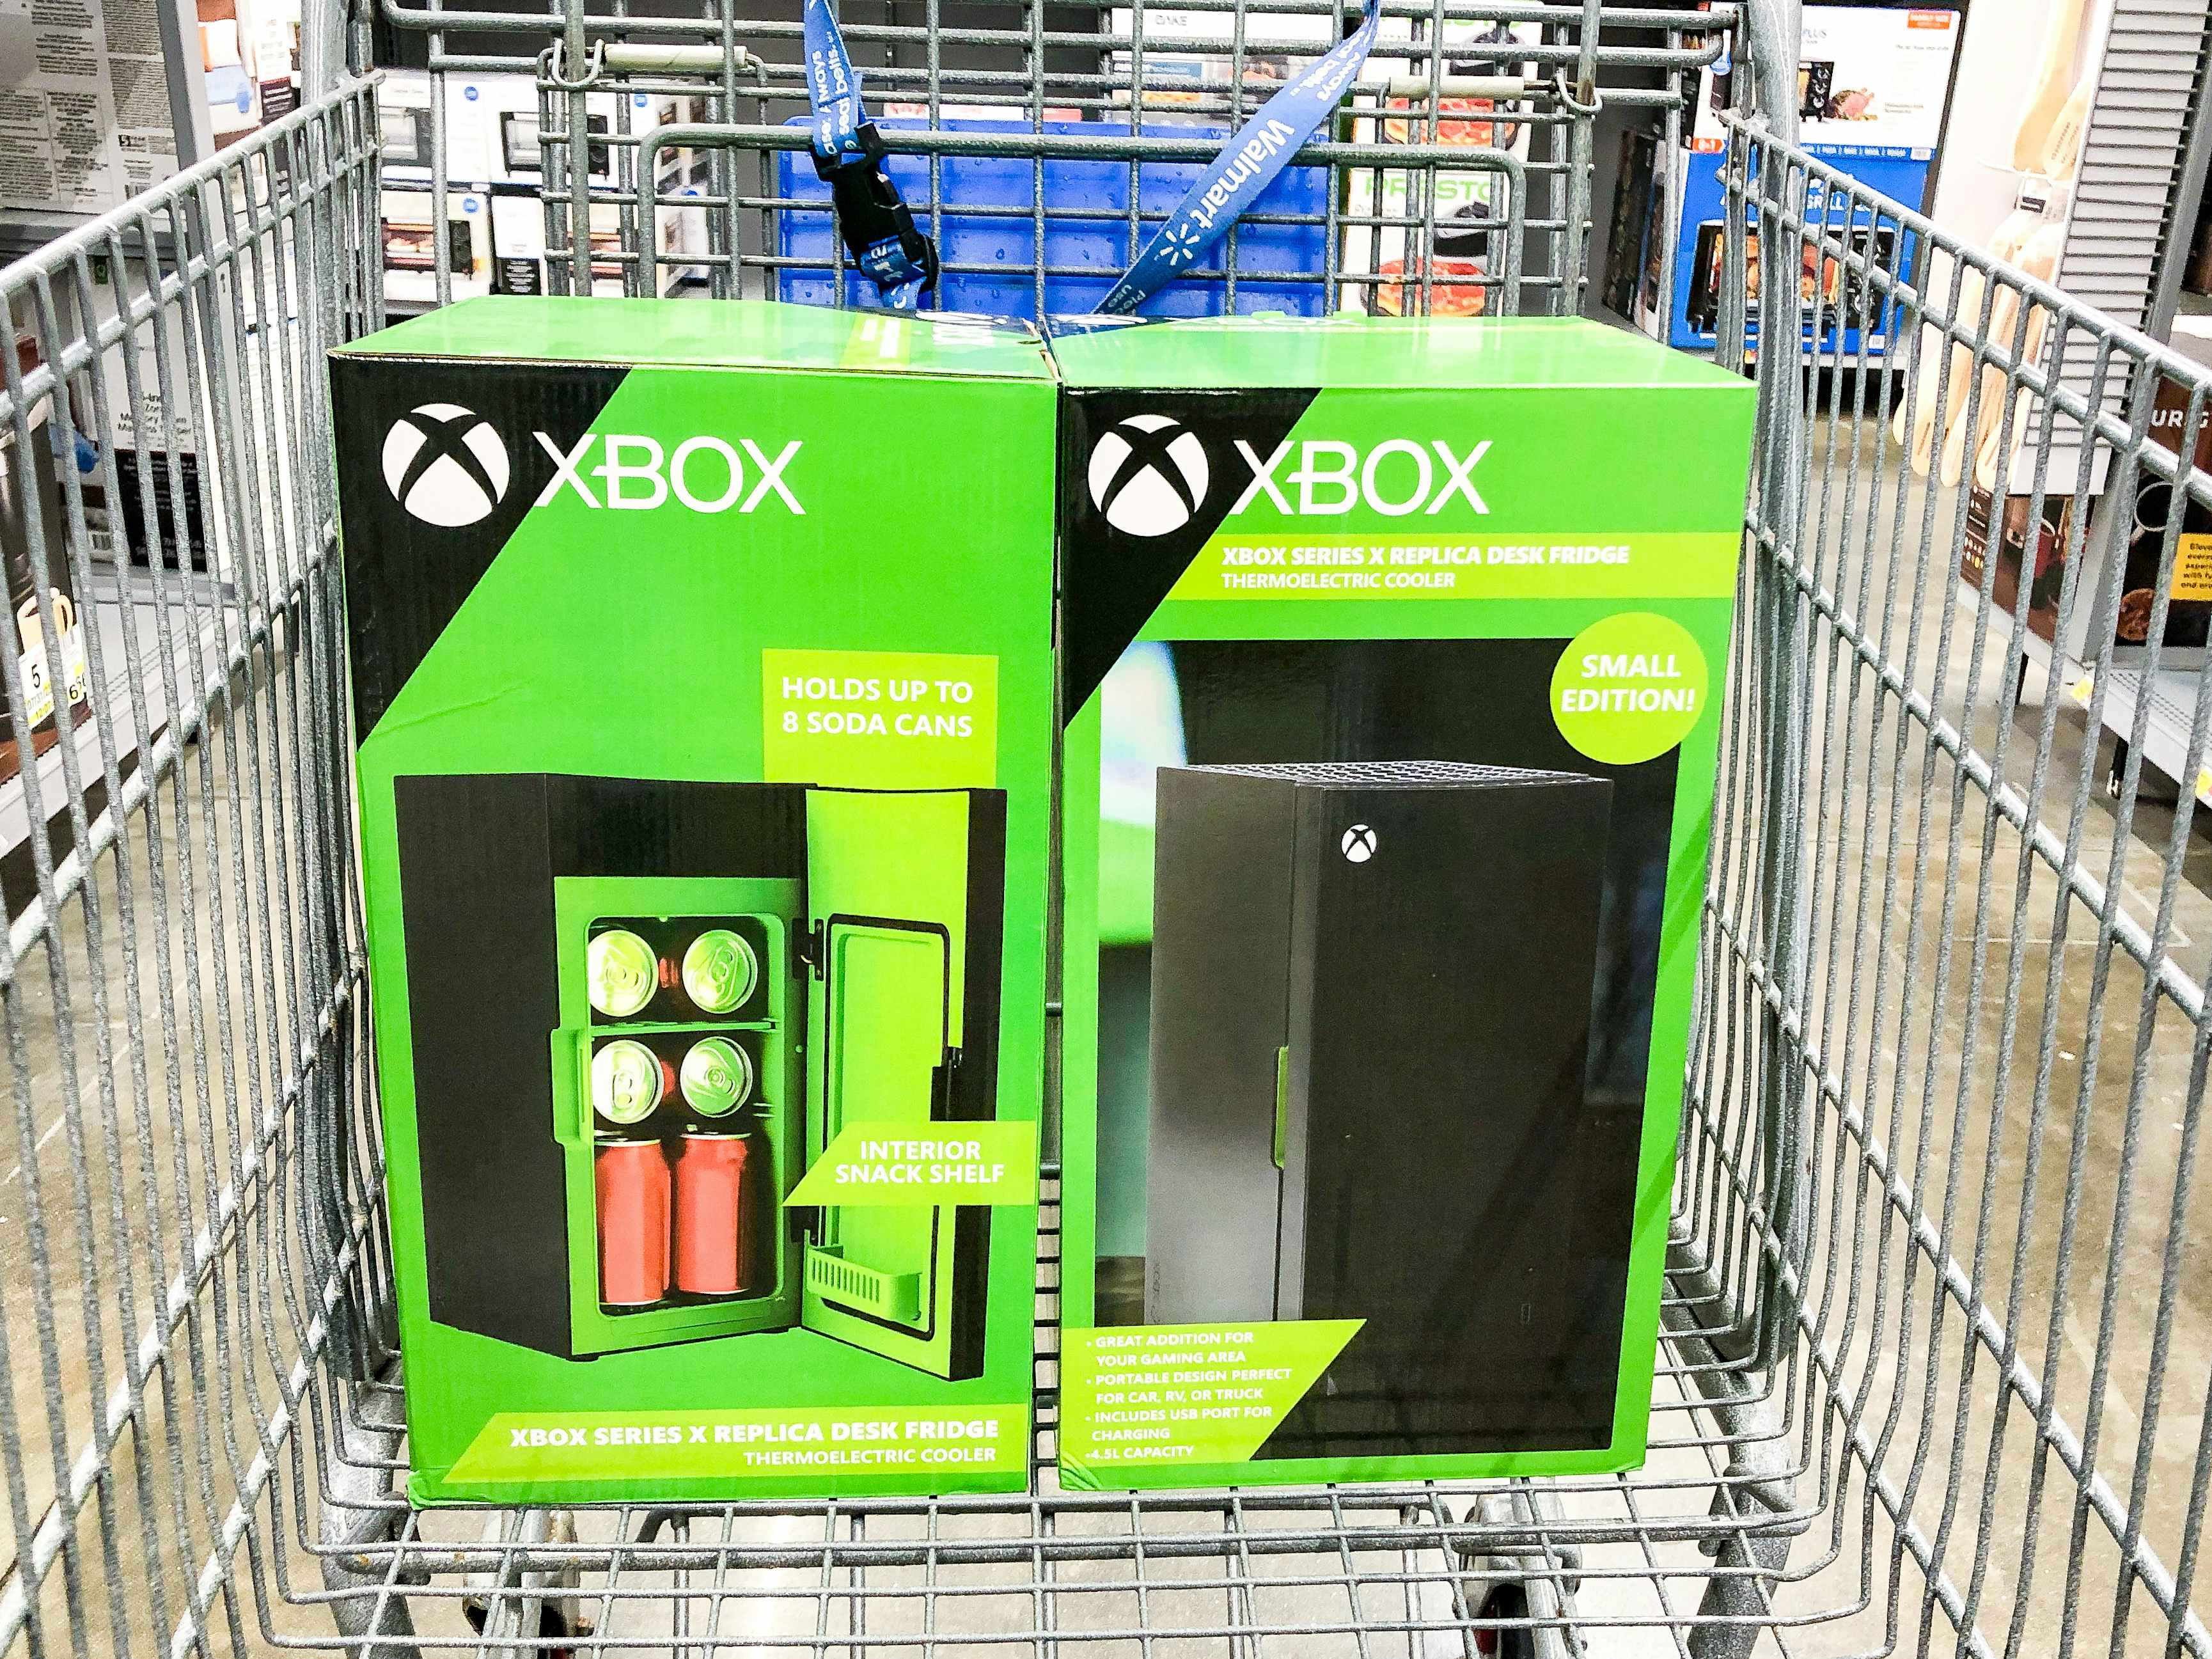 Get This Xbox Mini Fridge at Walmart for $30 (Reg. $88) — Lowest Price Ever